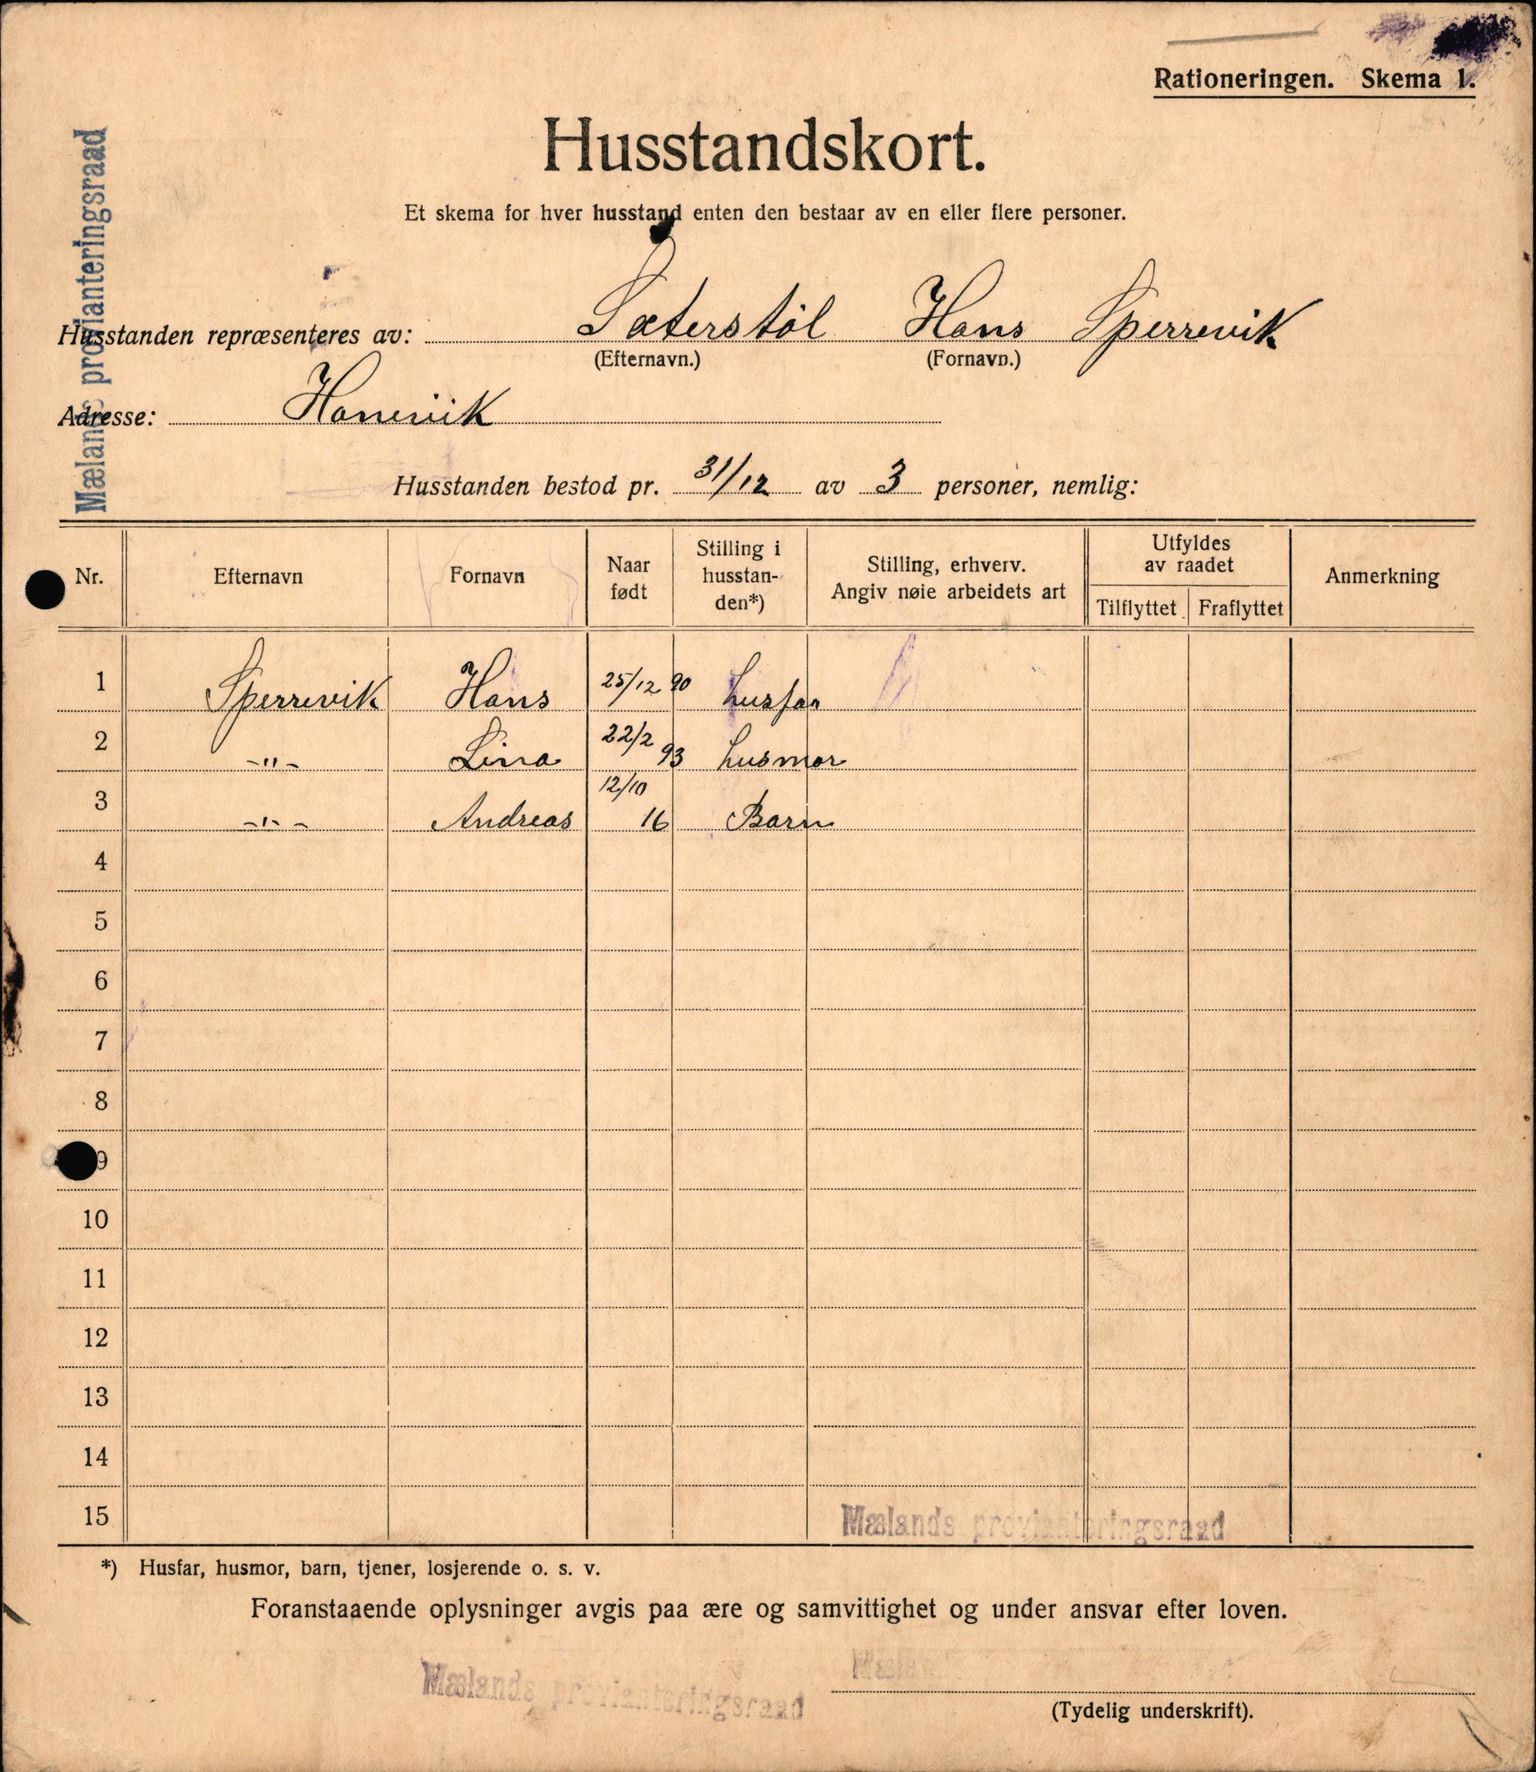 IKAH, Meland kommune, Provianteringsrådet, Husstander per 01.11.1917, 1917-1918, s. 2